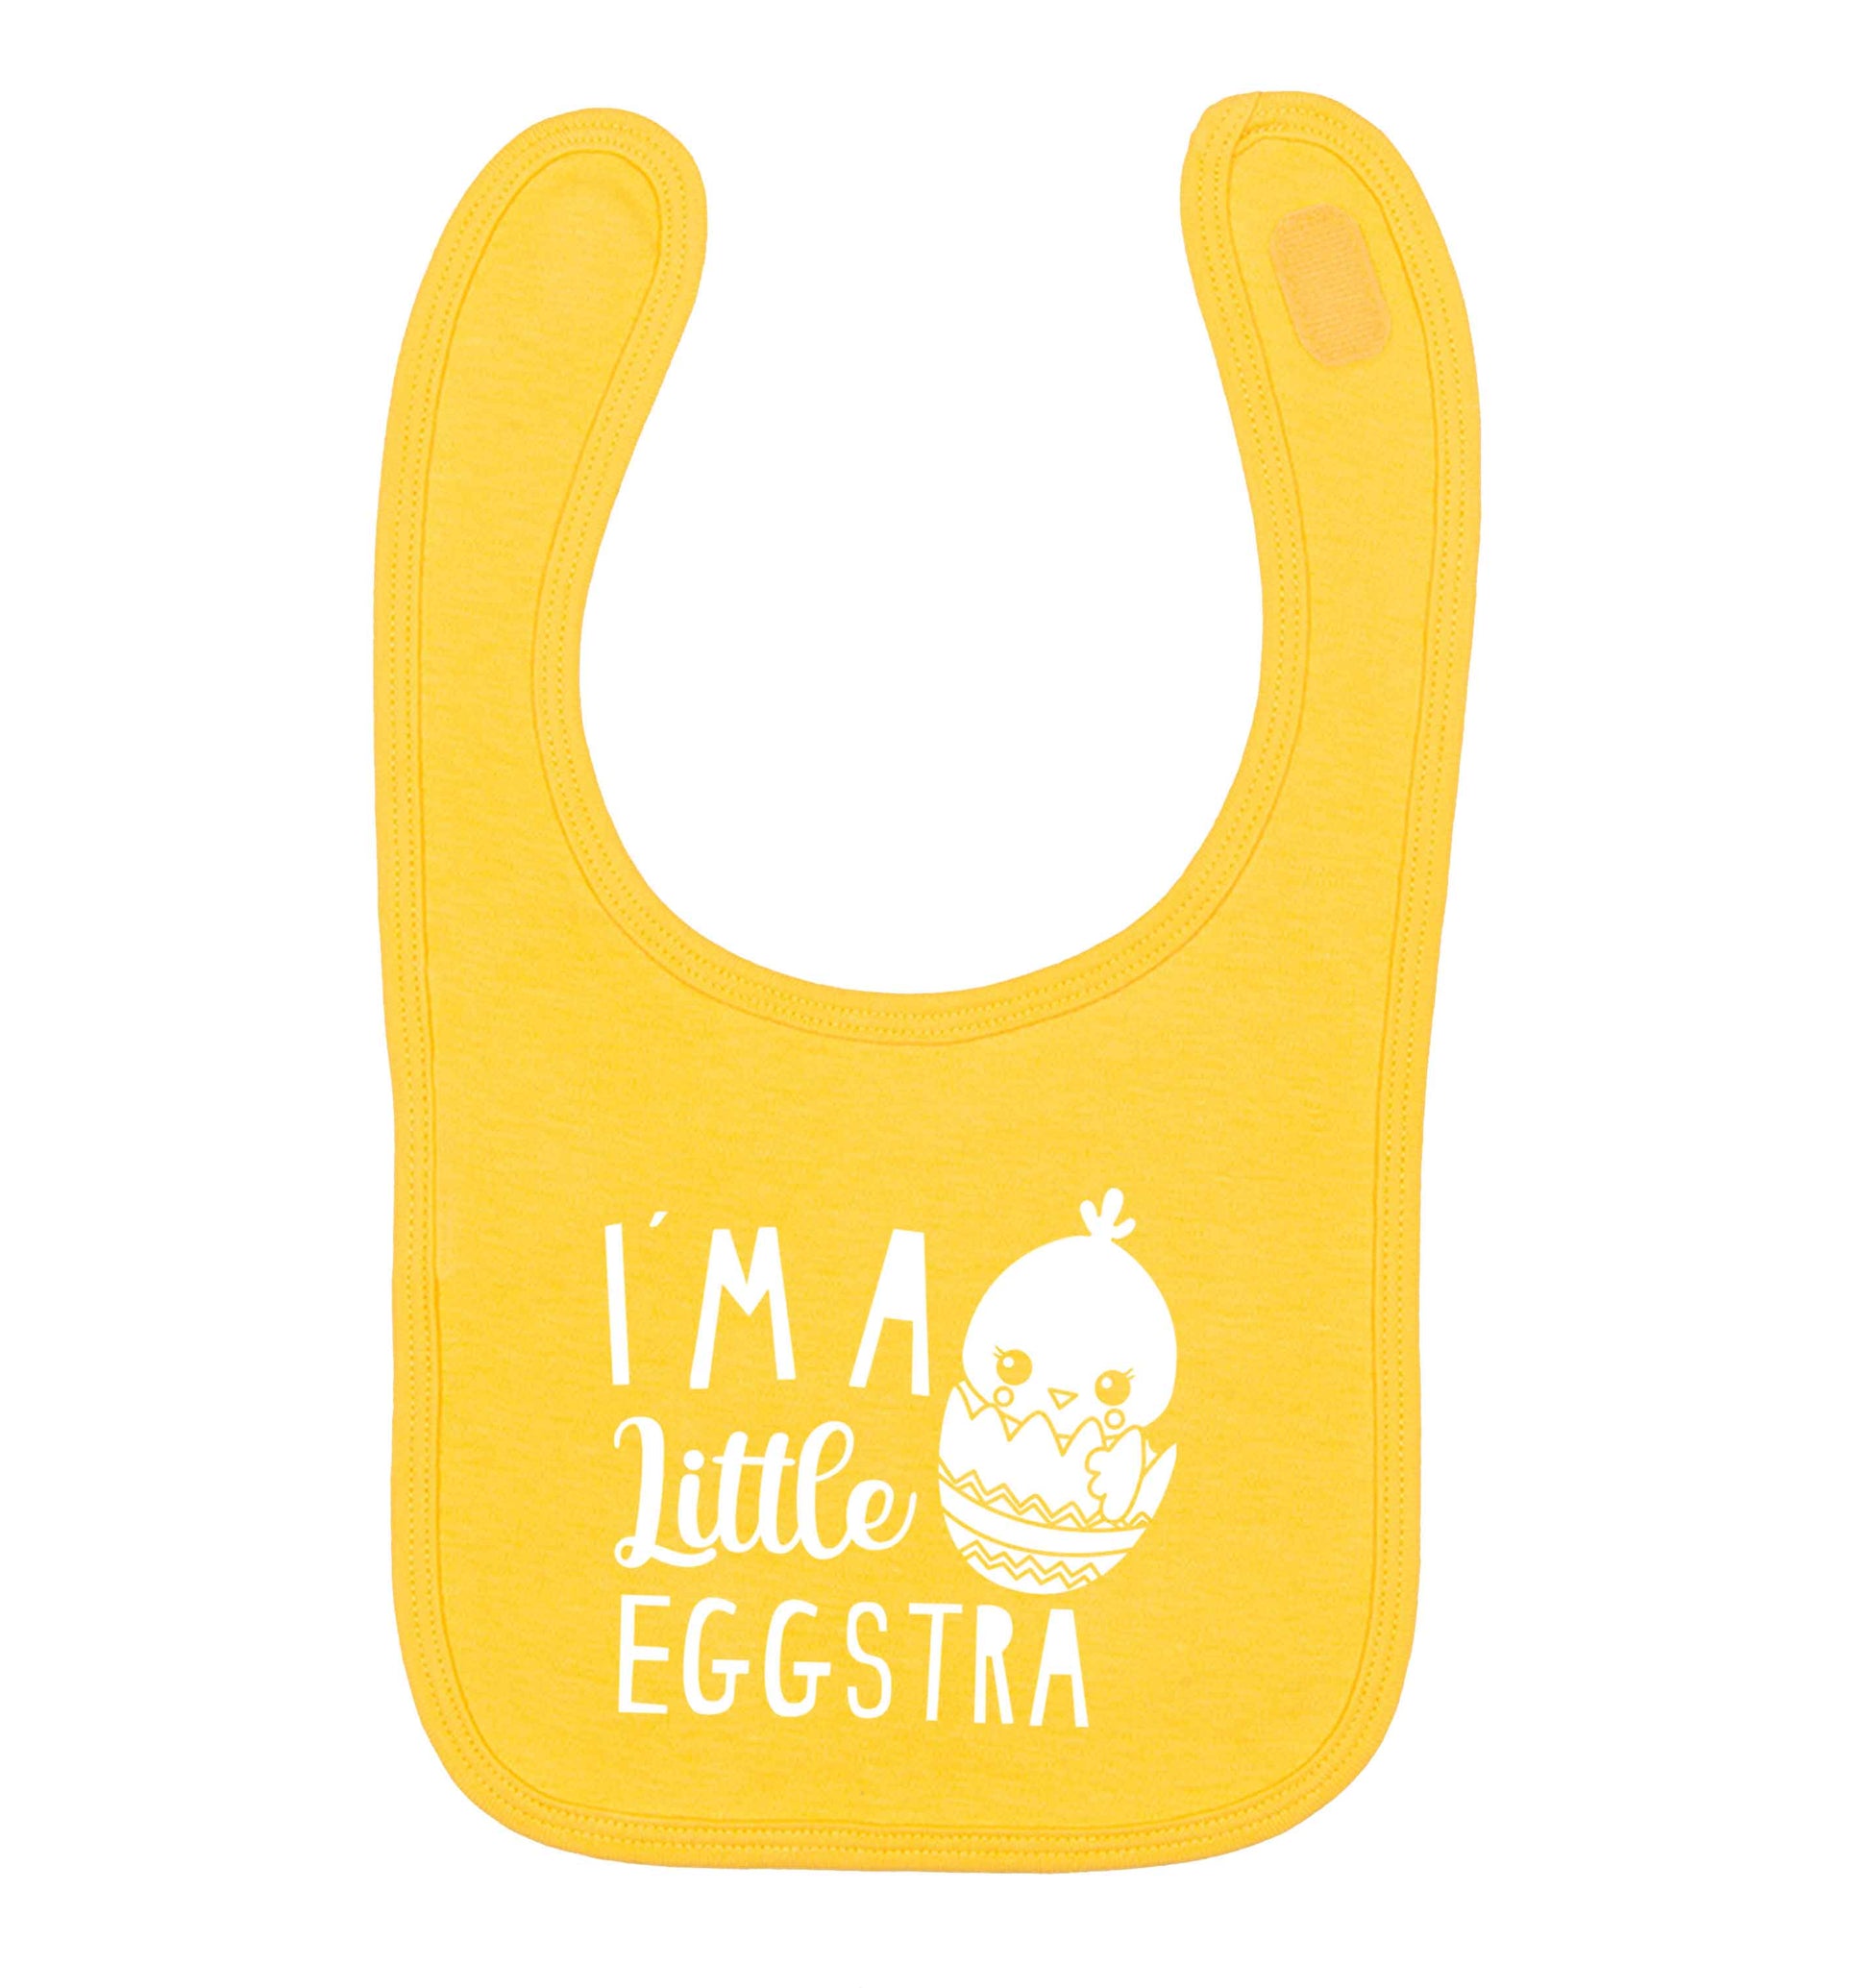 I'm a little eggstra yellow baby bib